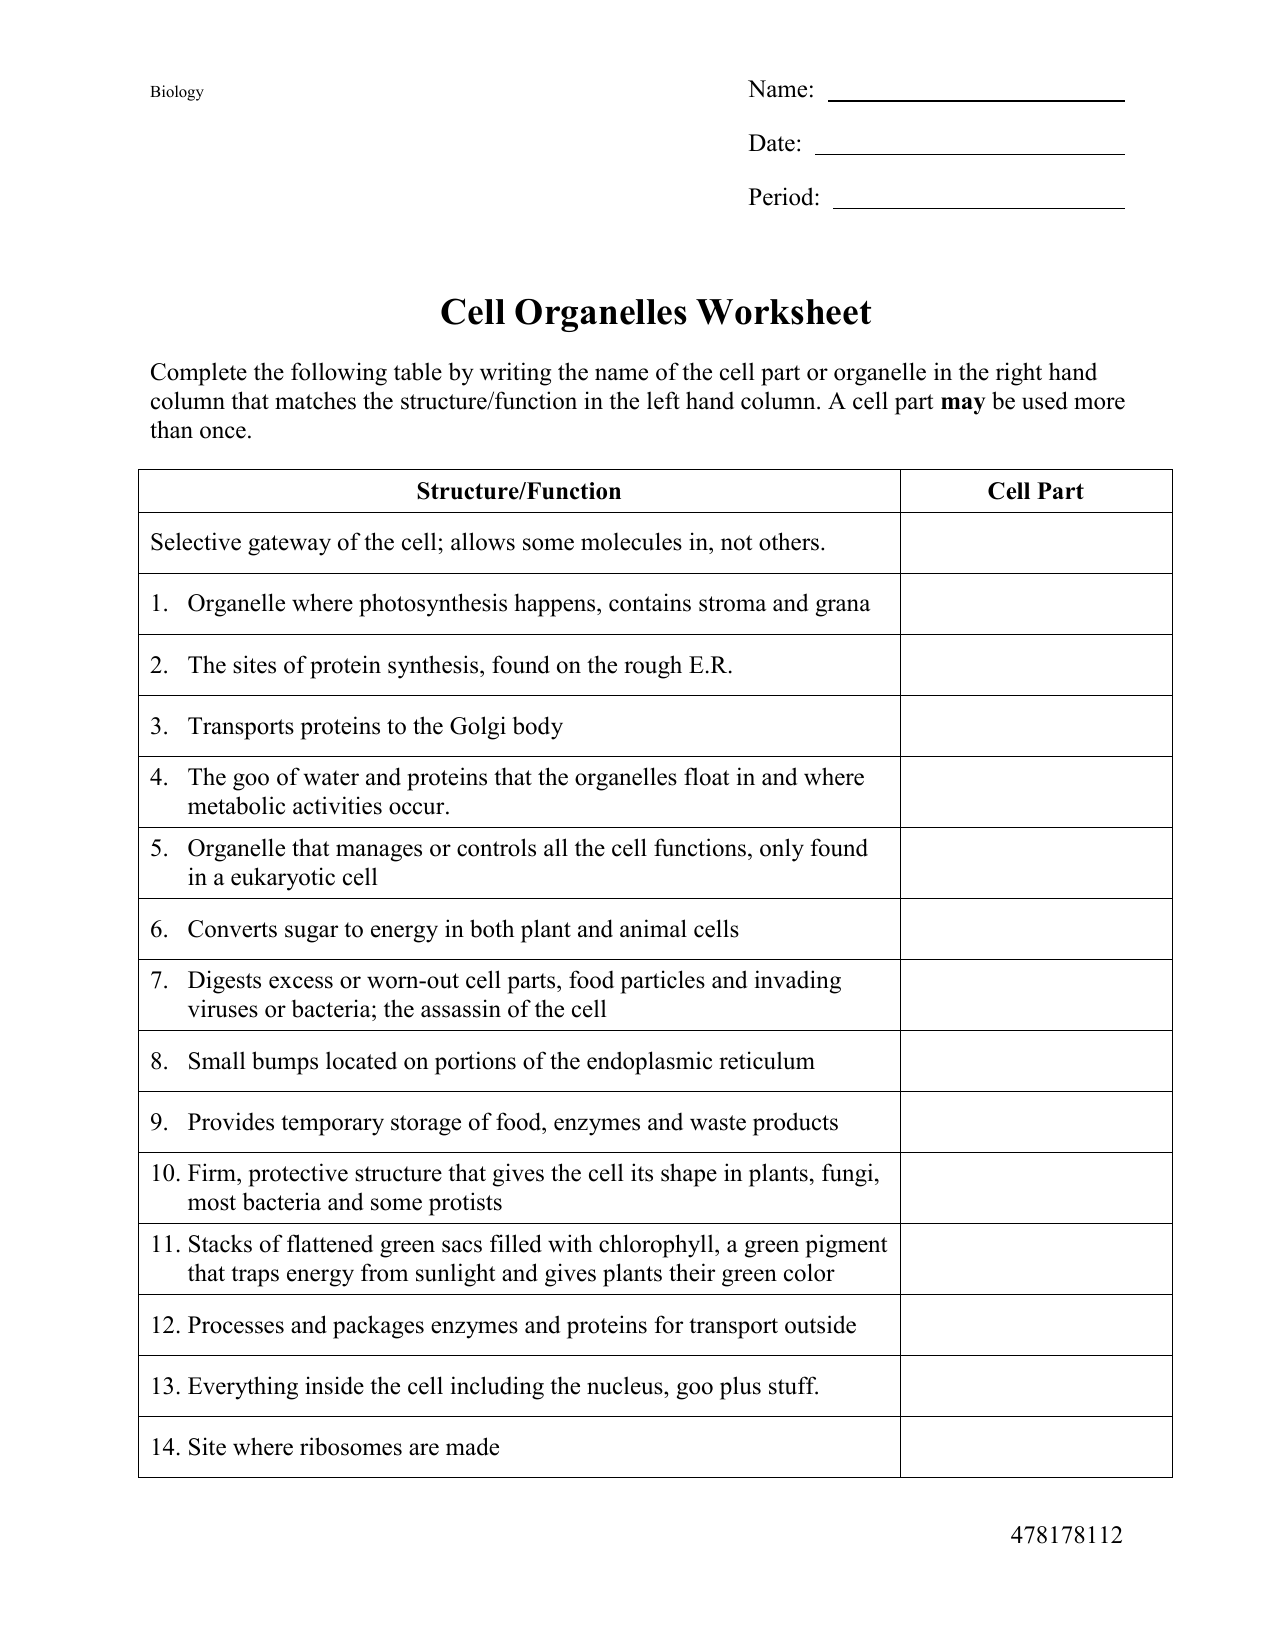 Cell Organelles Worksheet Regarding Cells And Their Organelles Worksheet